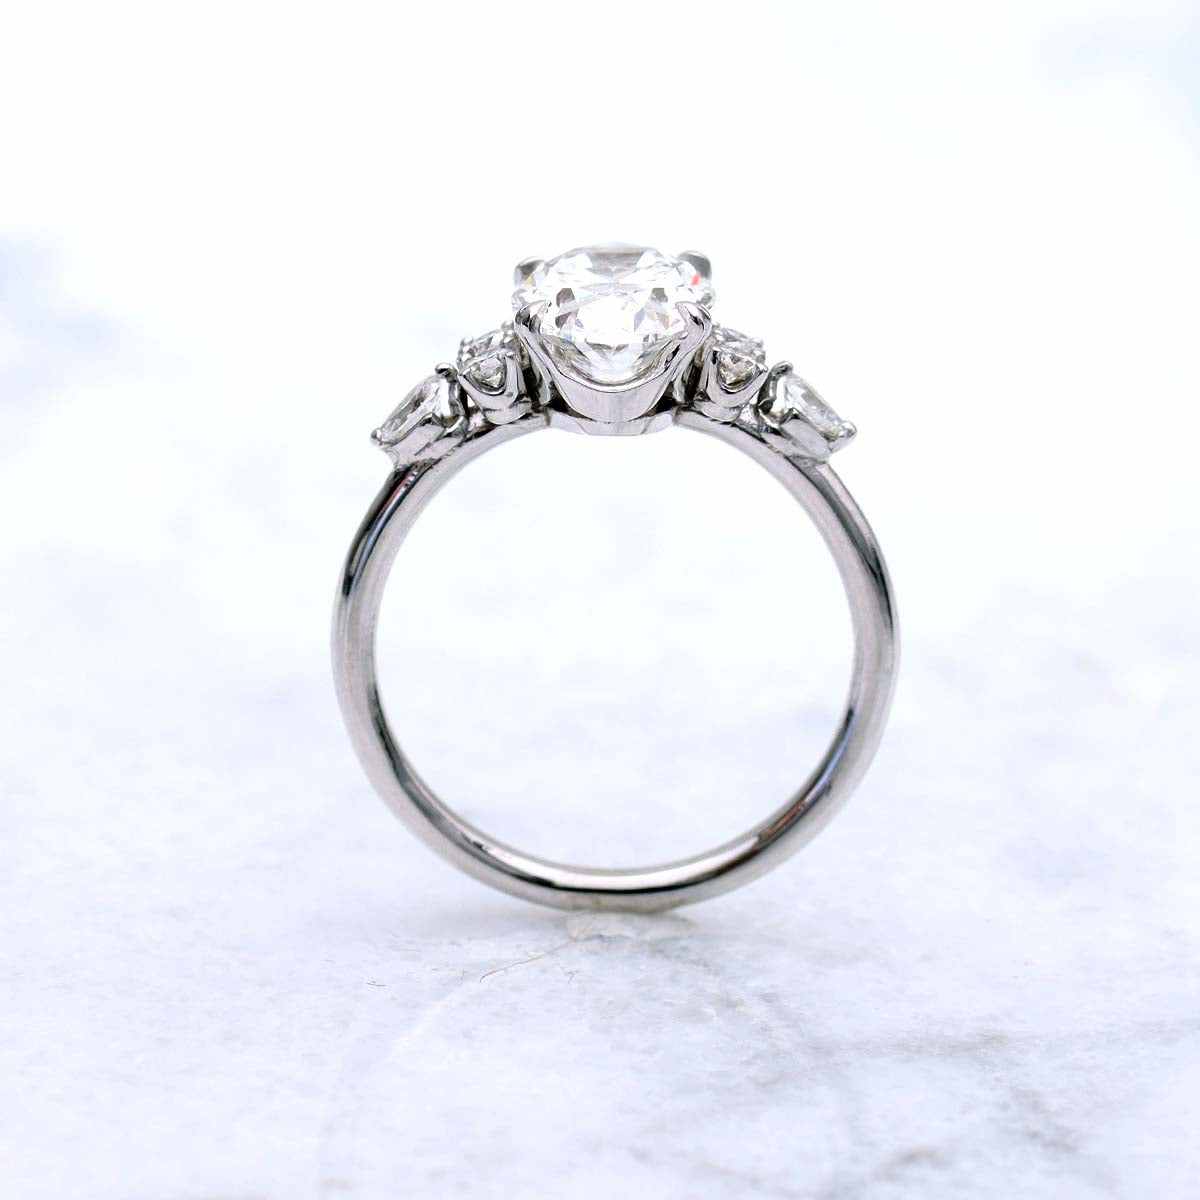 The Stella Jane Engagement Ring #3642-3